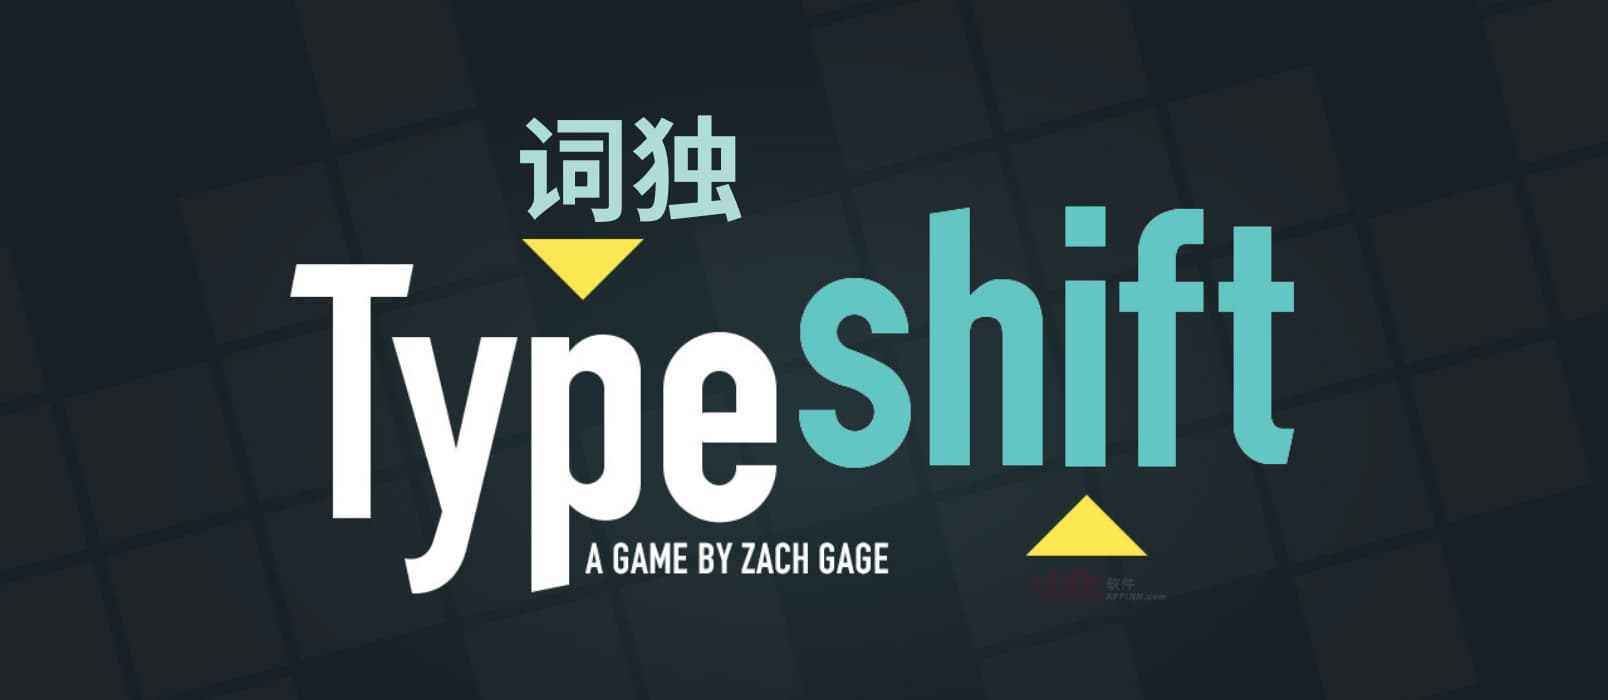 Typeshift - 我愿称之为“词独（Wordoku）”的拼词游戏[iPhone/Android]